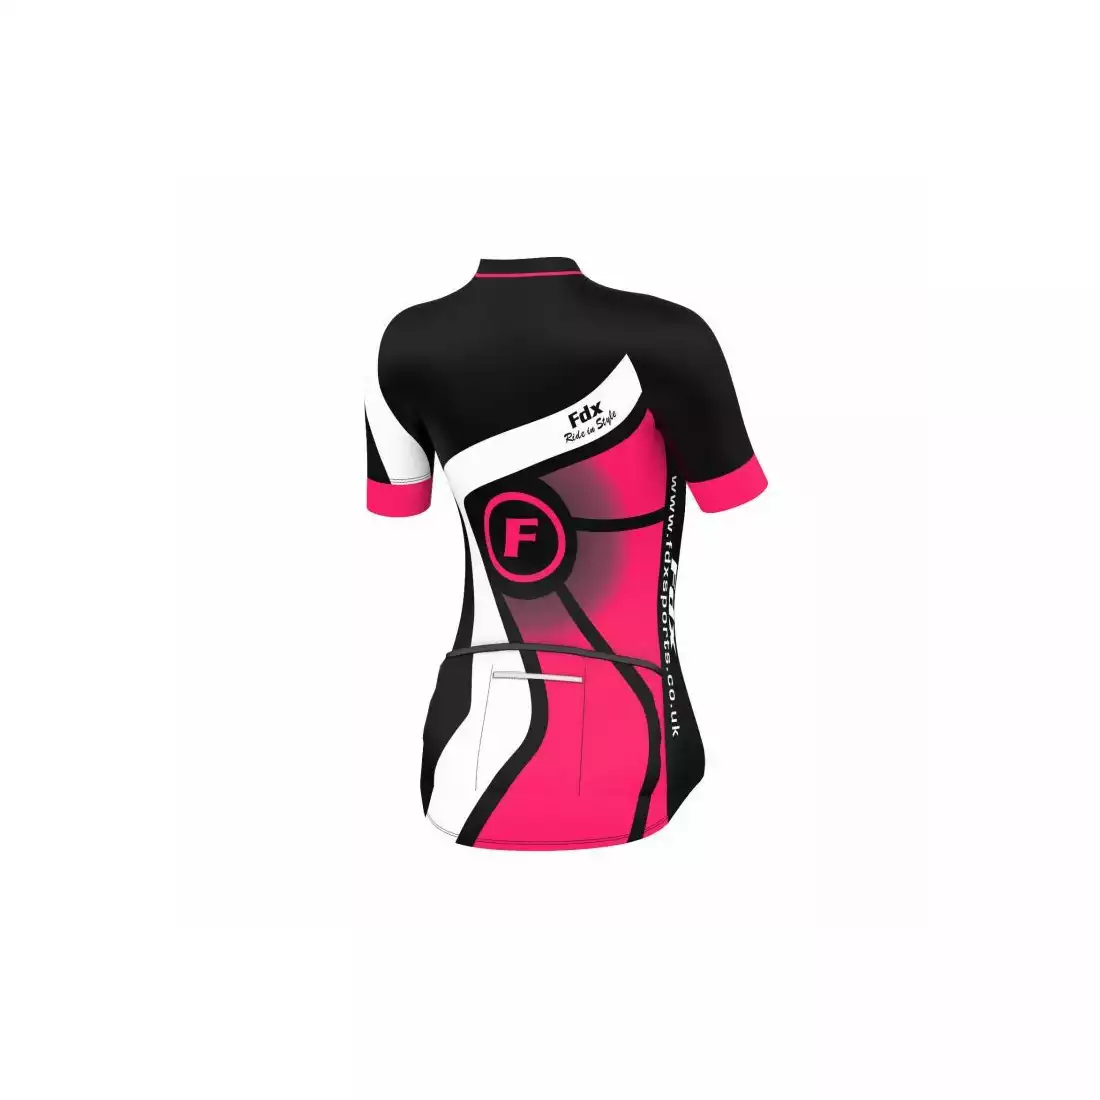 FDX 1020 damska koszulka rowerowa czarno-różowa 